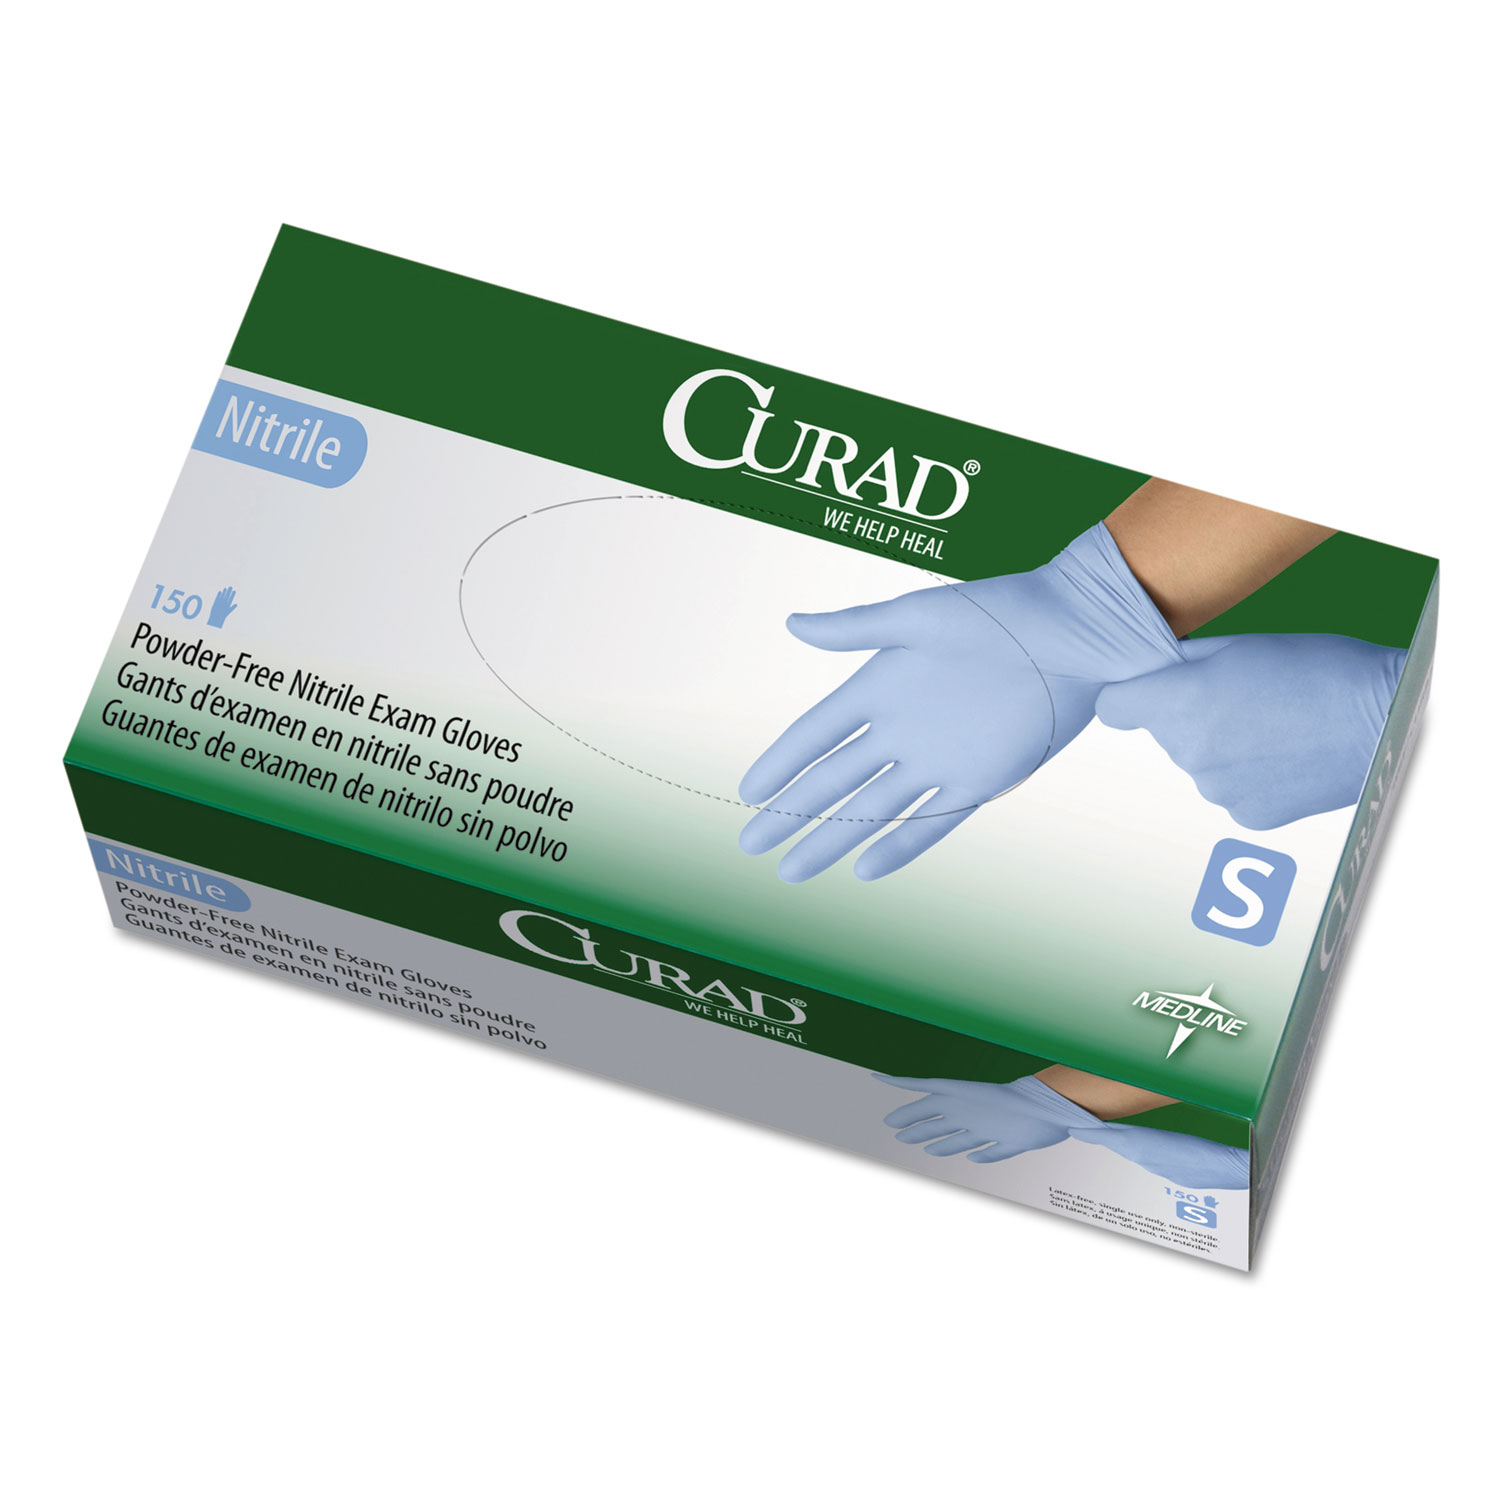  Curad CUR9314 Nitrile Exam Glove, Powder-Free, Small, 150/Box (MIICUR9314) 